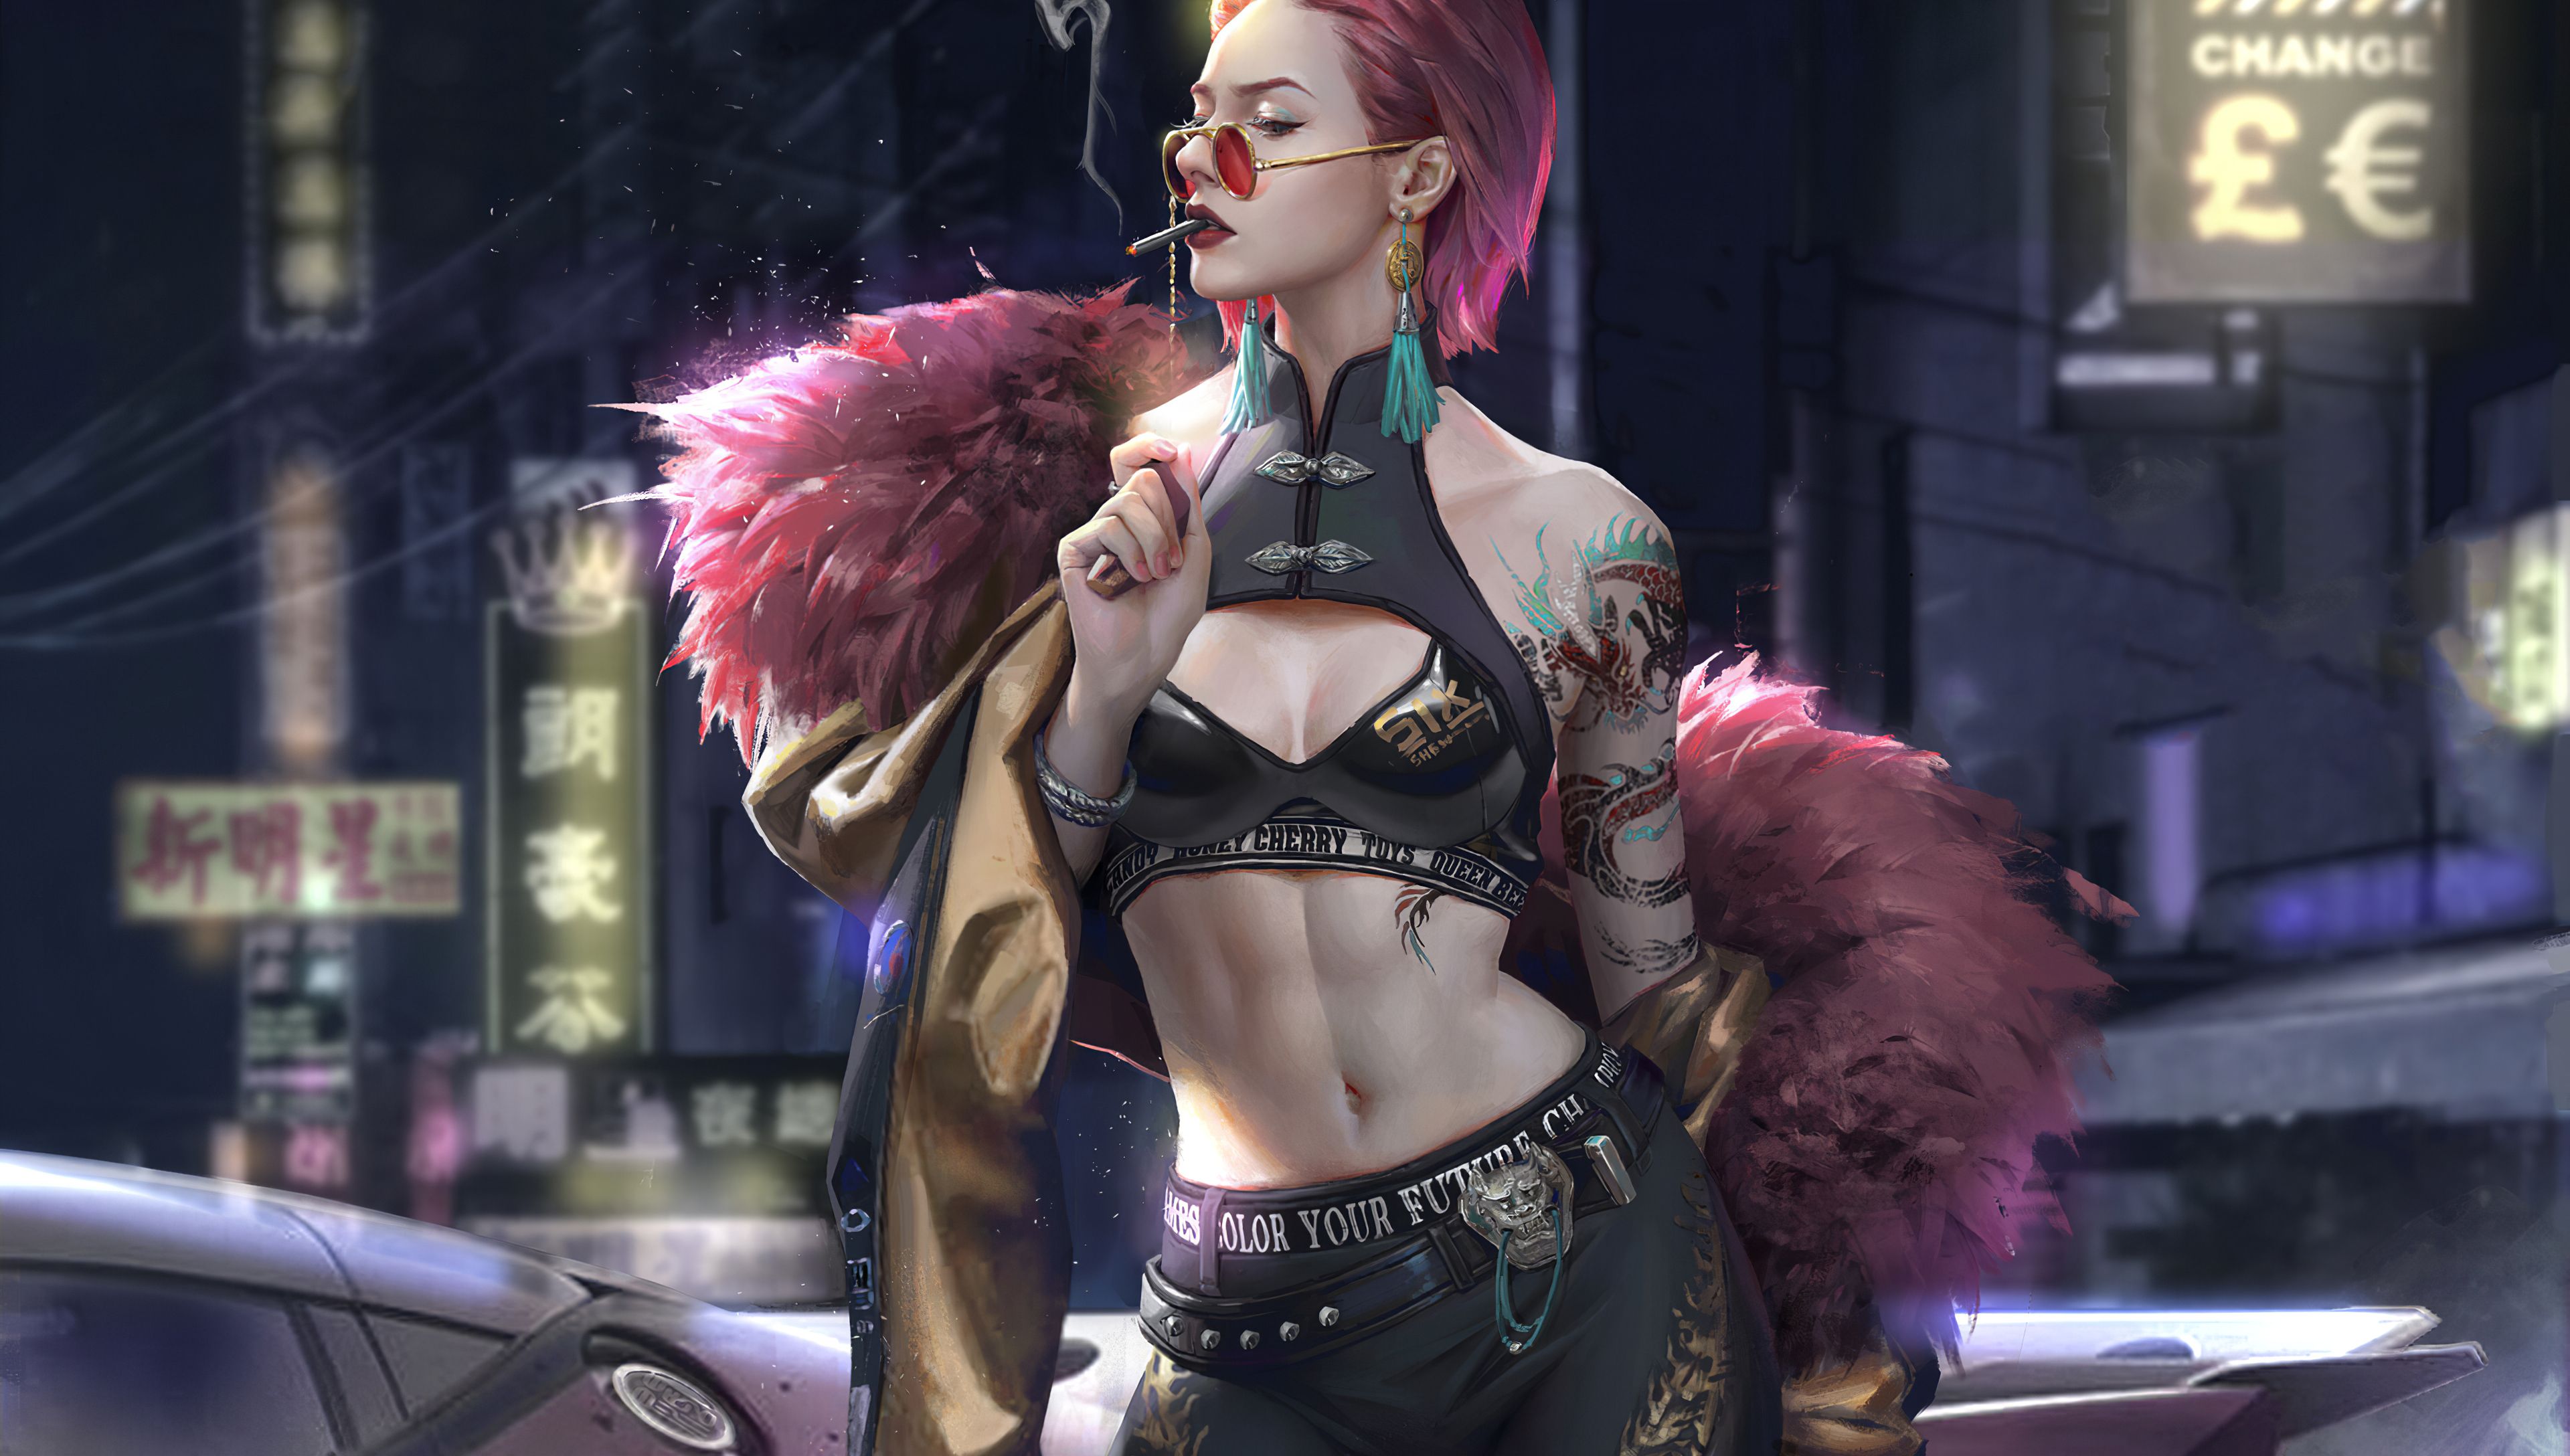 Kuo Cyberpunk Girl, HD Artist, 4k Wallpaper, Image, Background